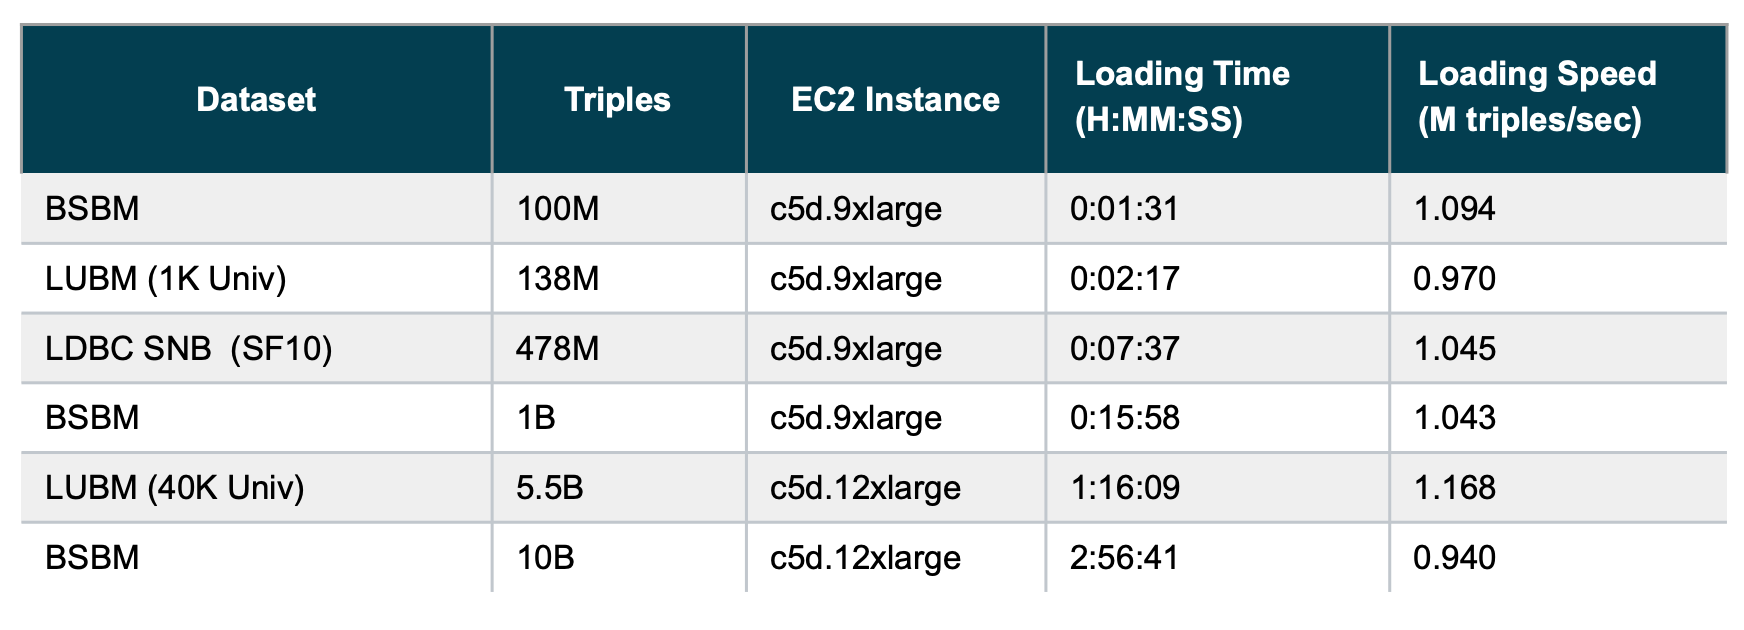 Table of loading speeds for benchmark datasets